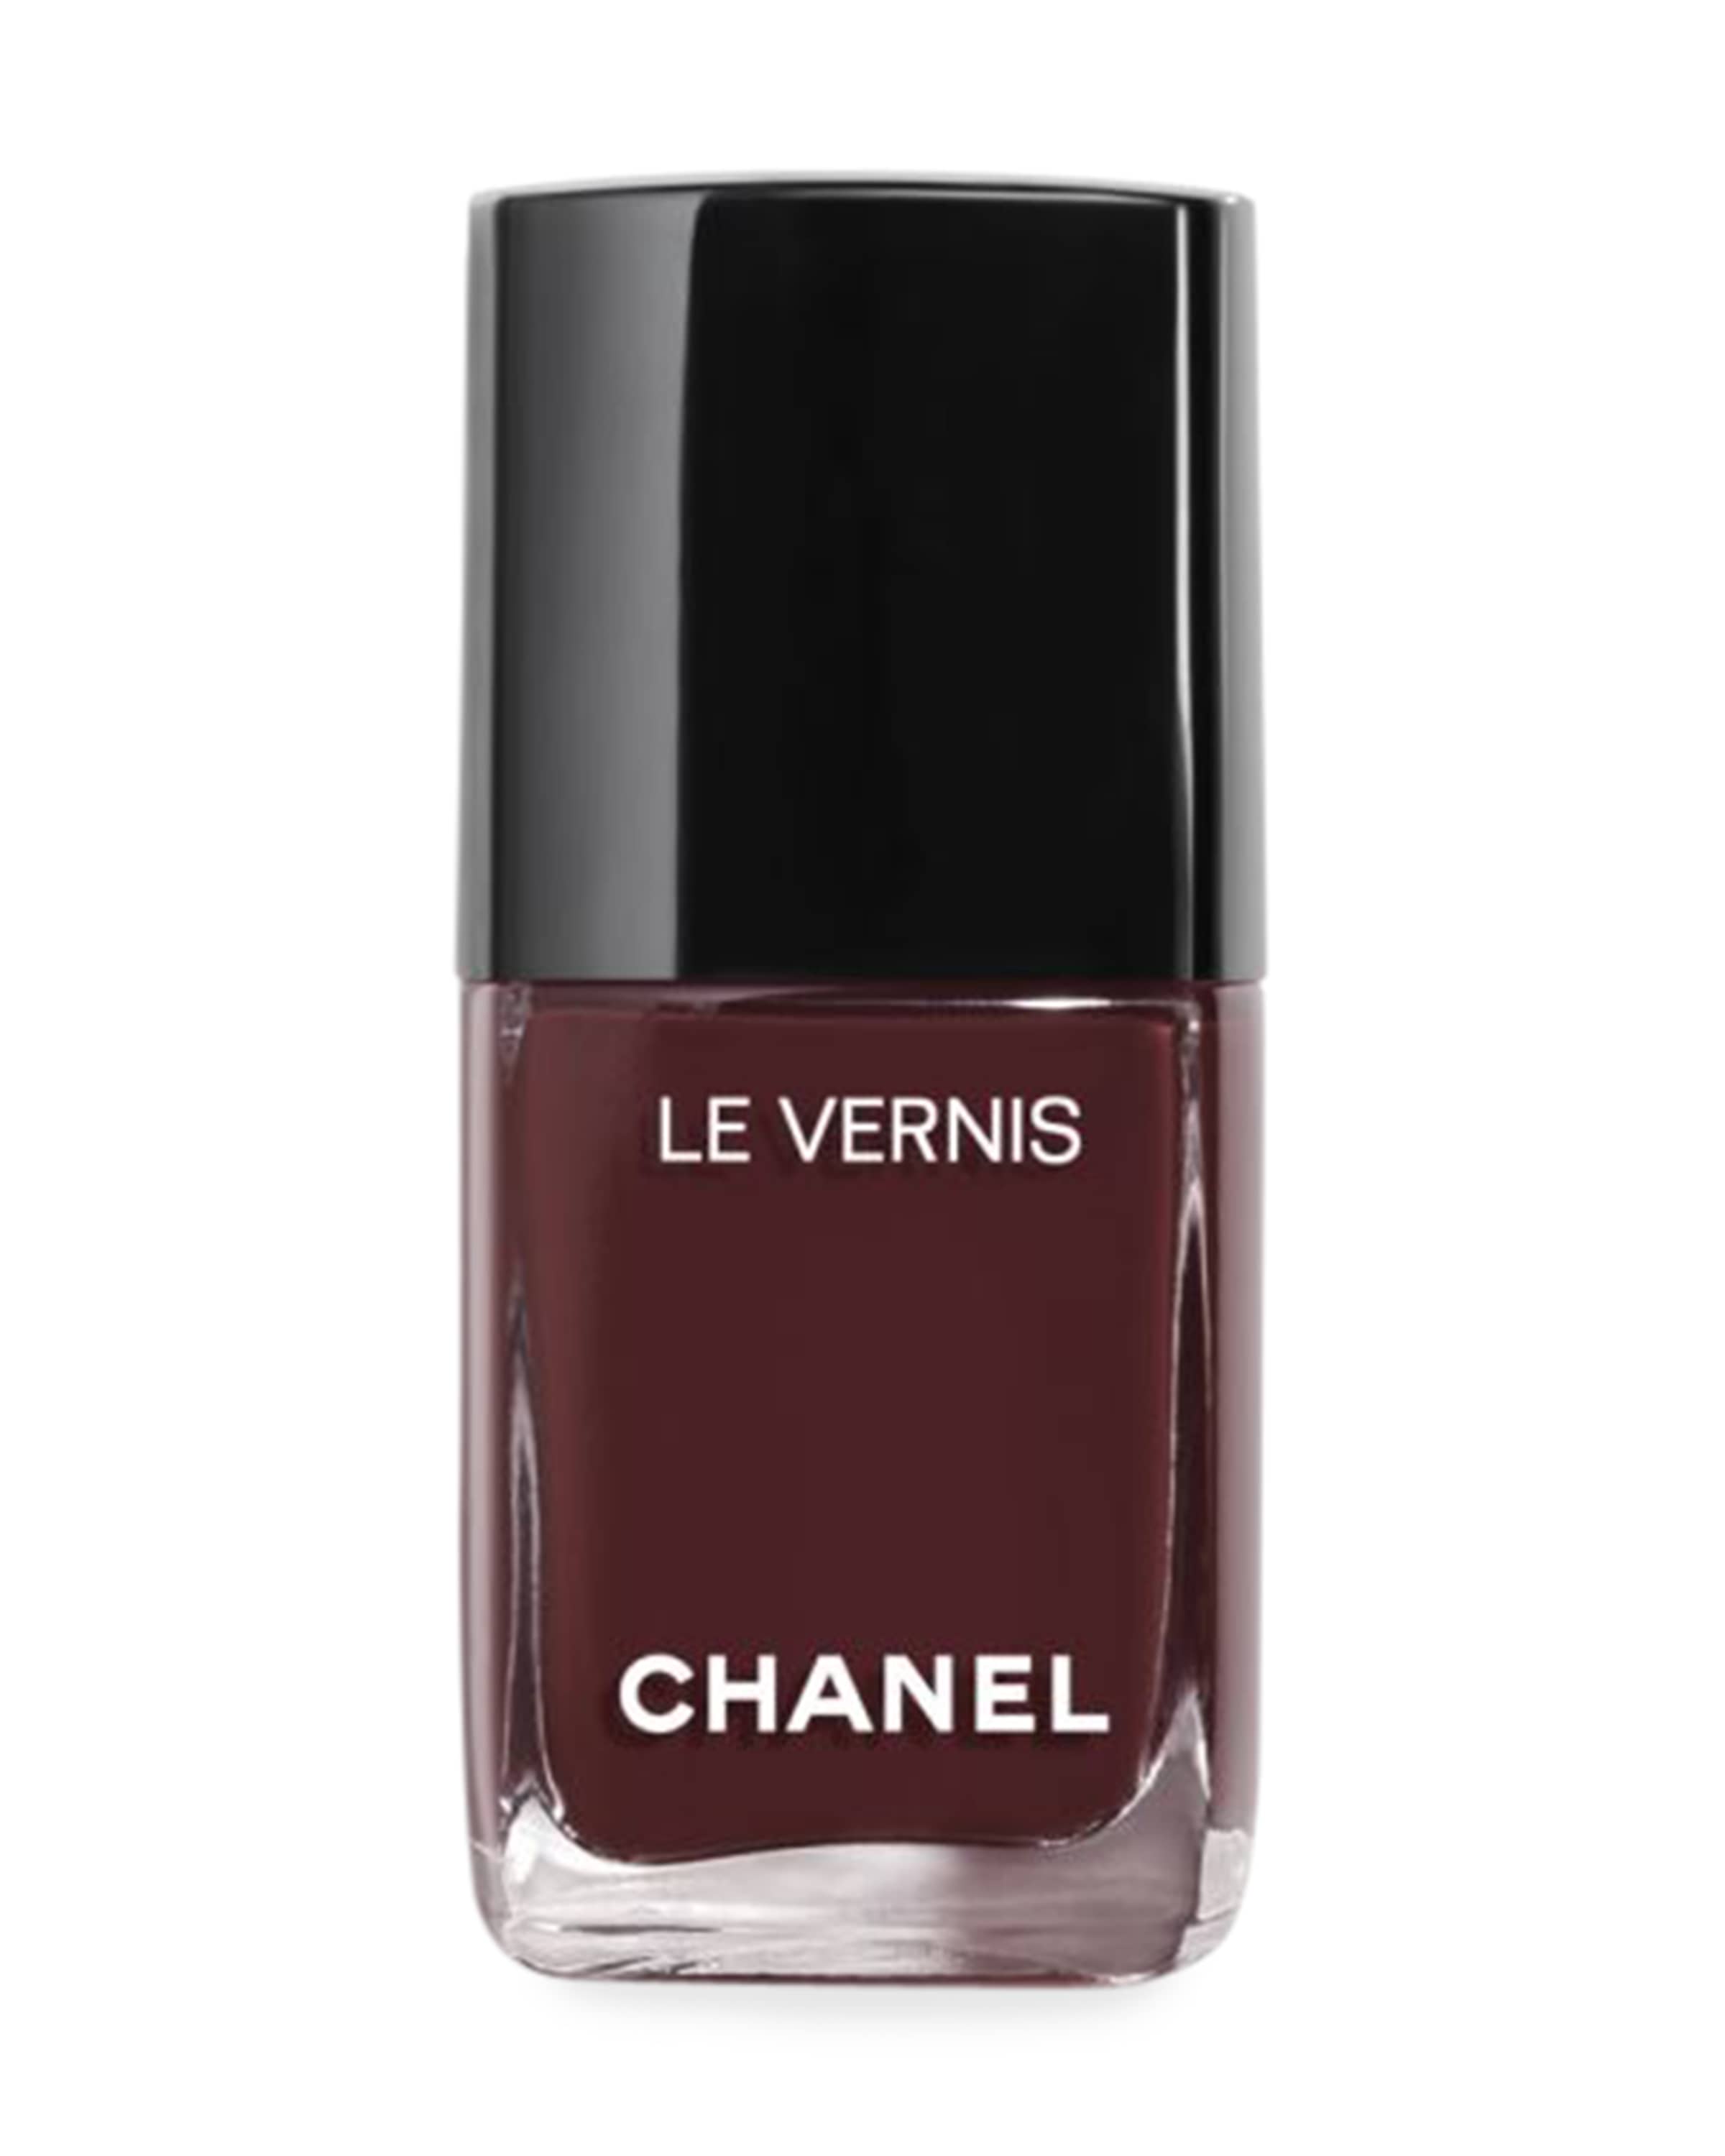 CHANEL LE VERNIS Longwear Nail Colour, 0.4 oz./ 12 mL